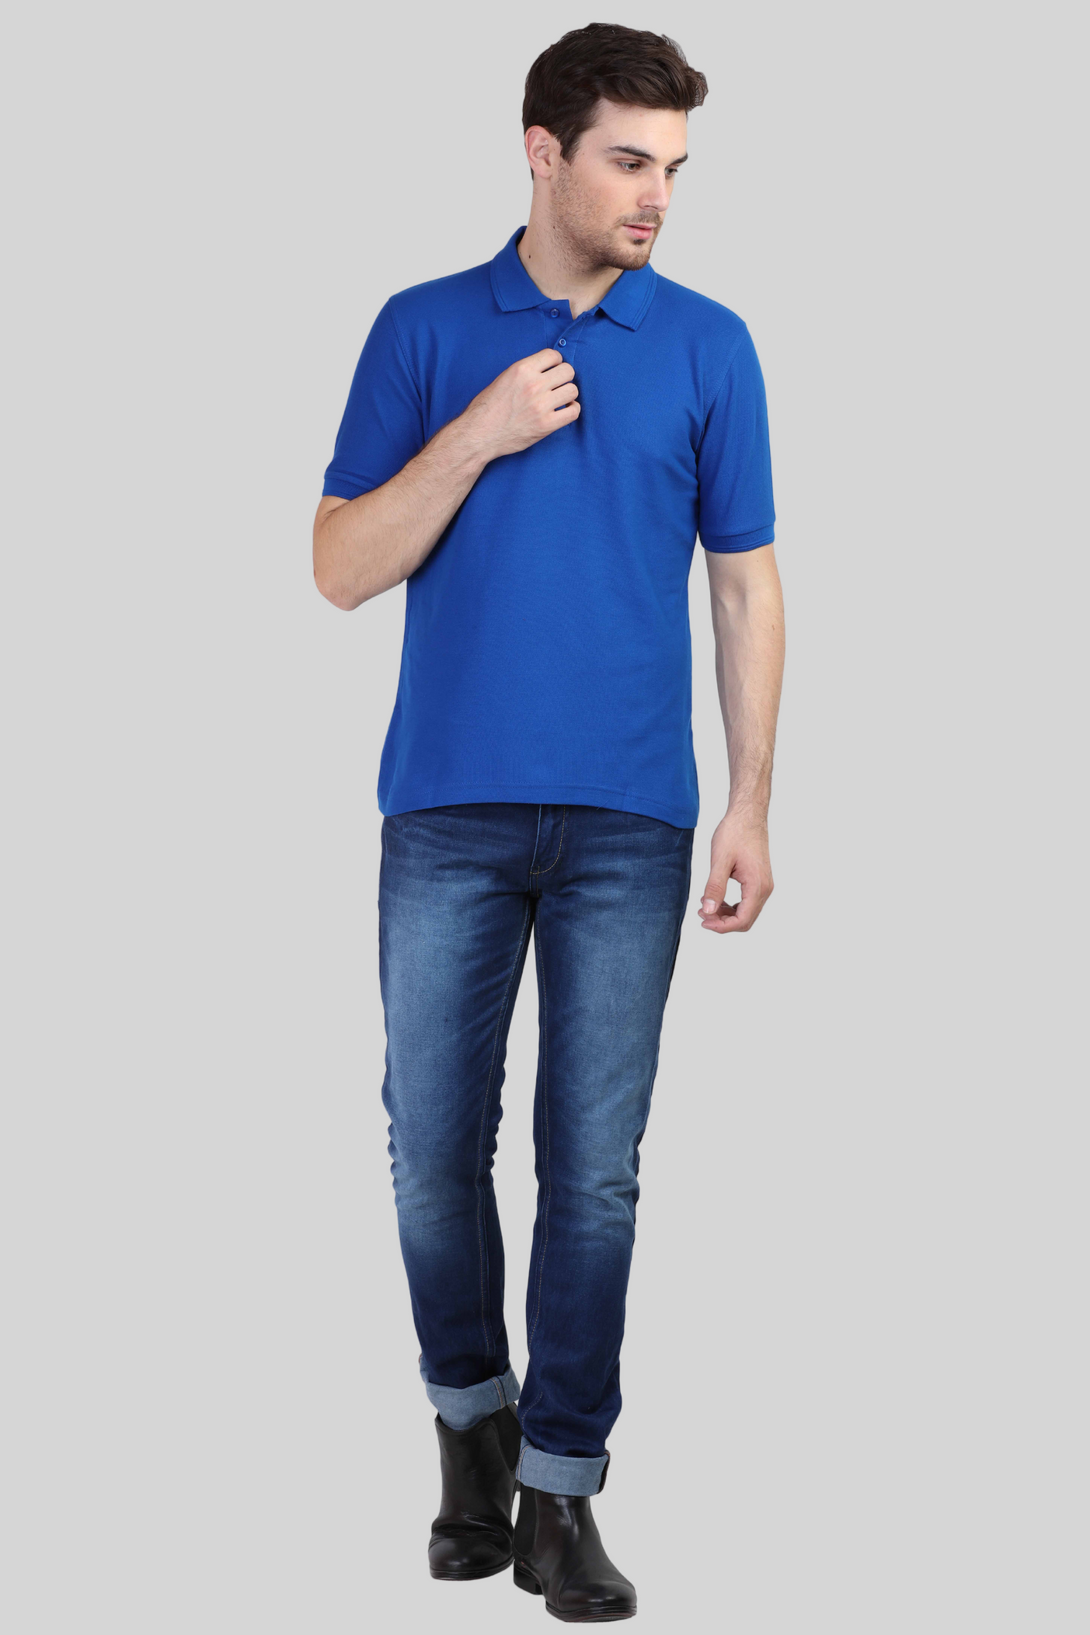 Royal Blue Polo T-Shirt For Men - WowWaves - 2